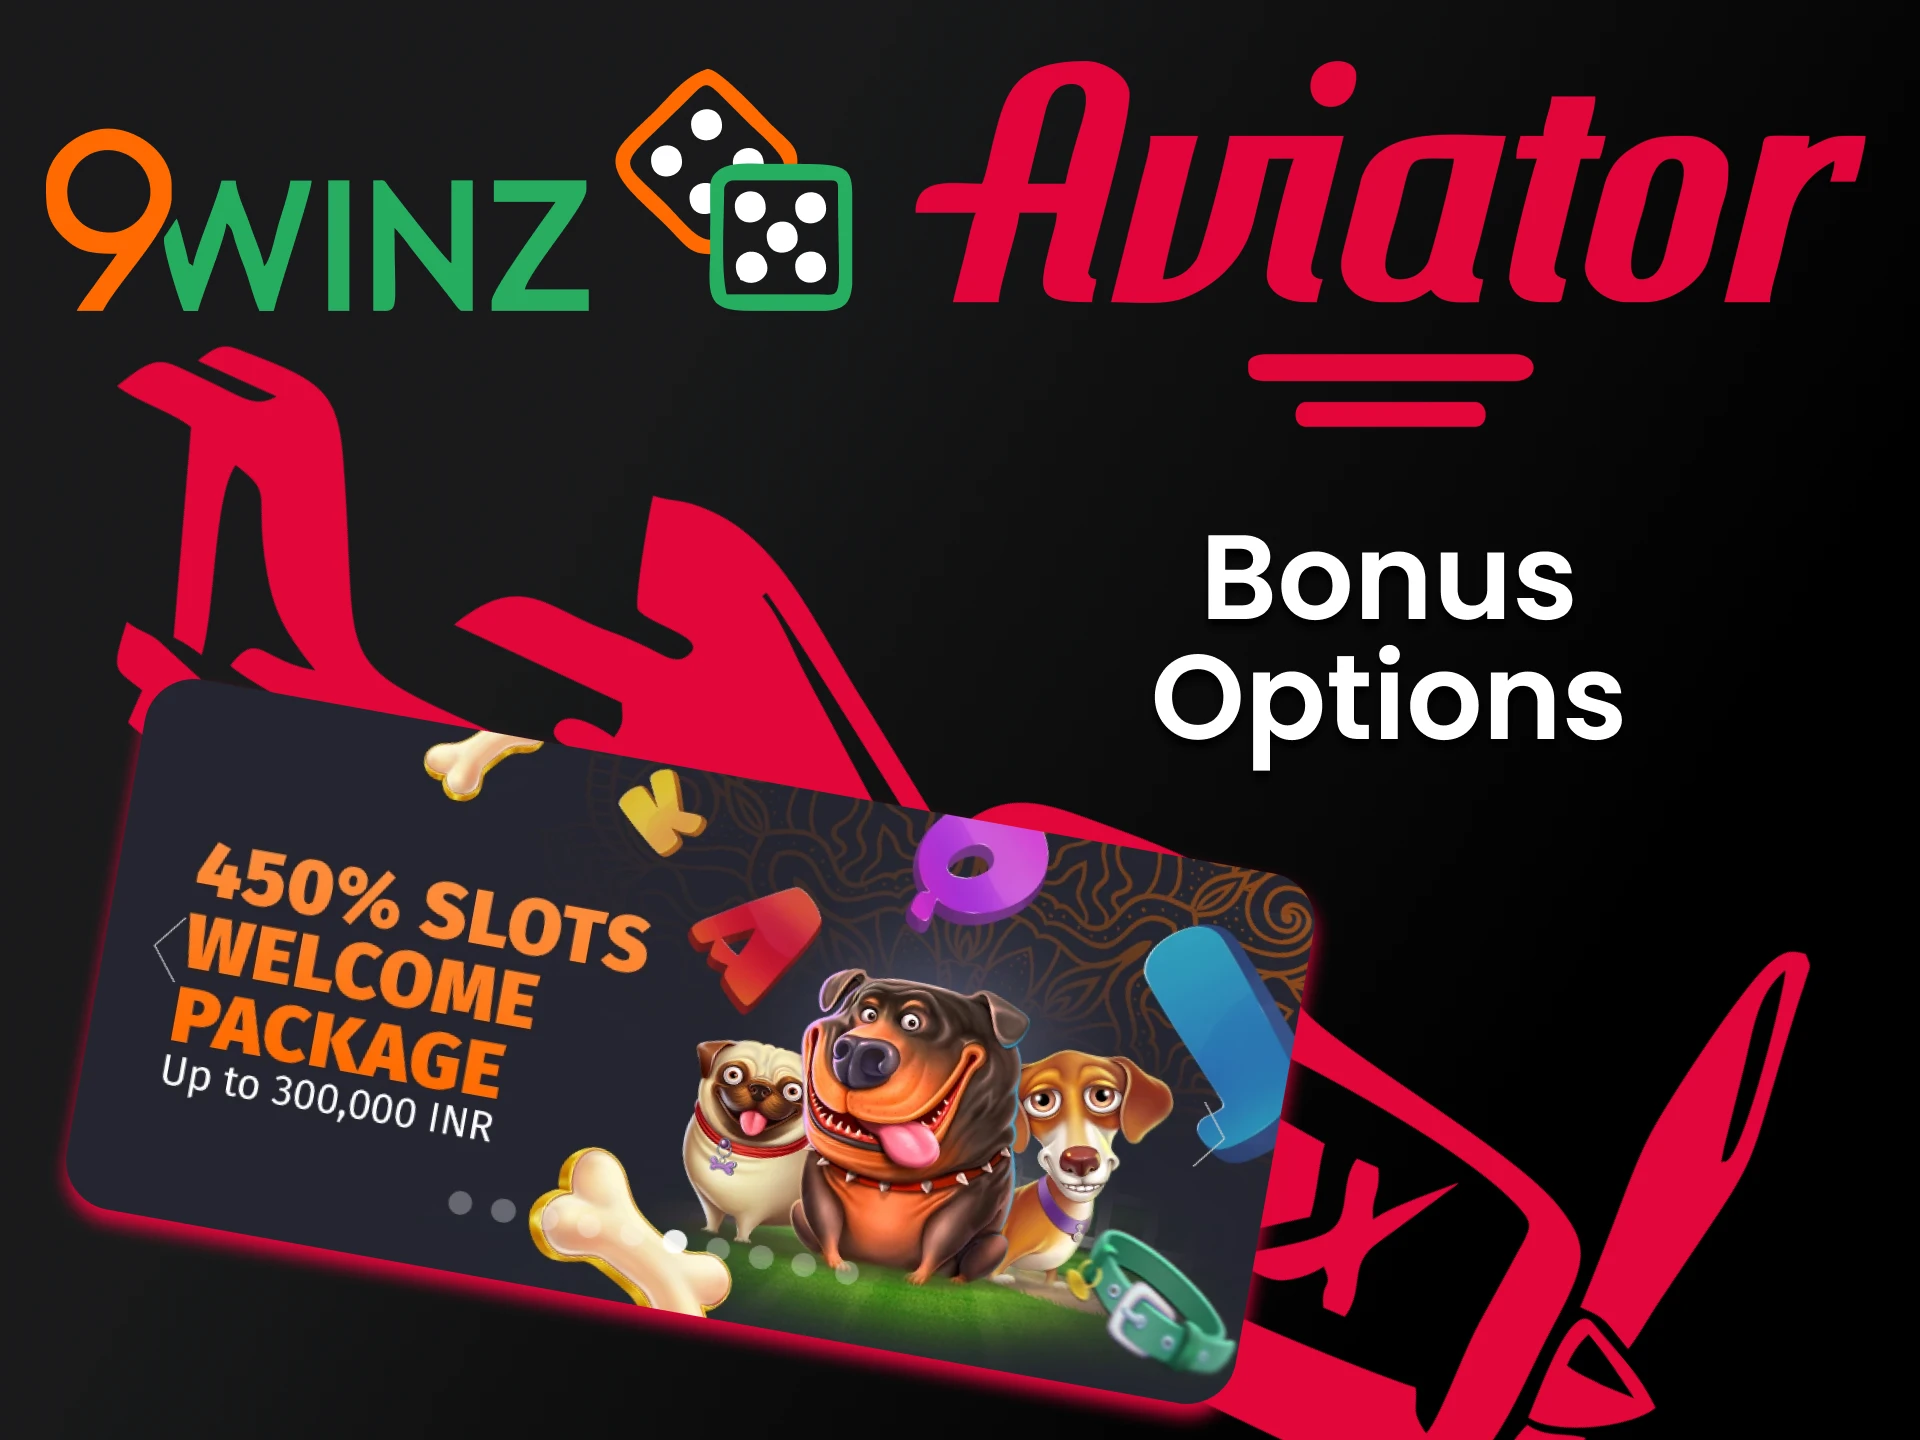 Get Aviator Bonus from 9winz.